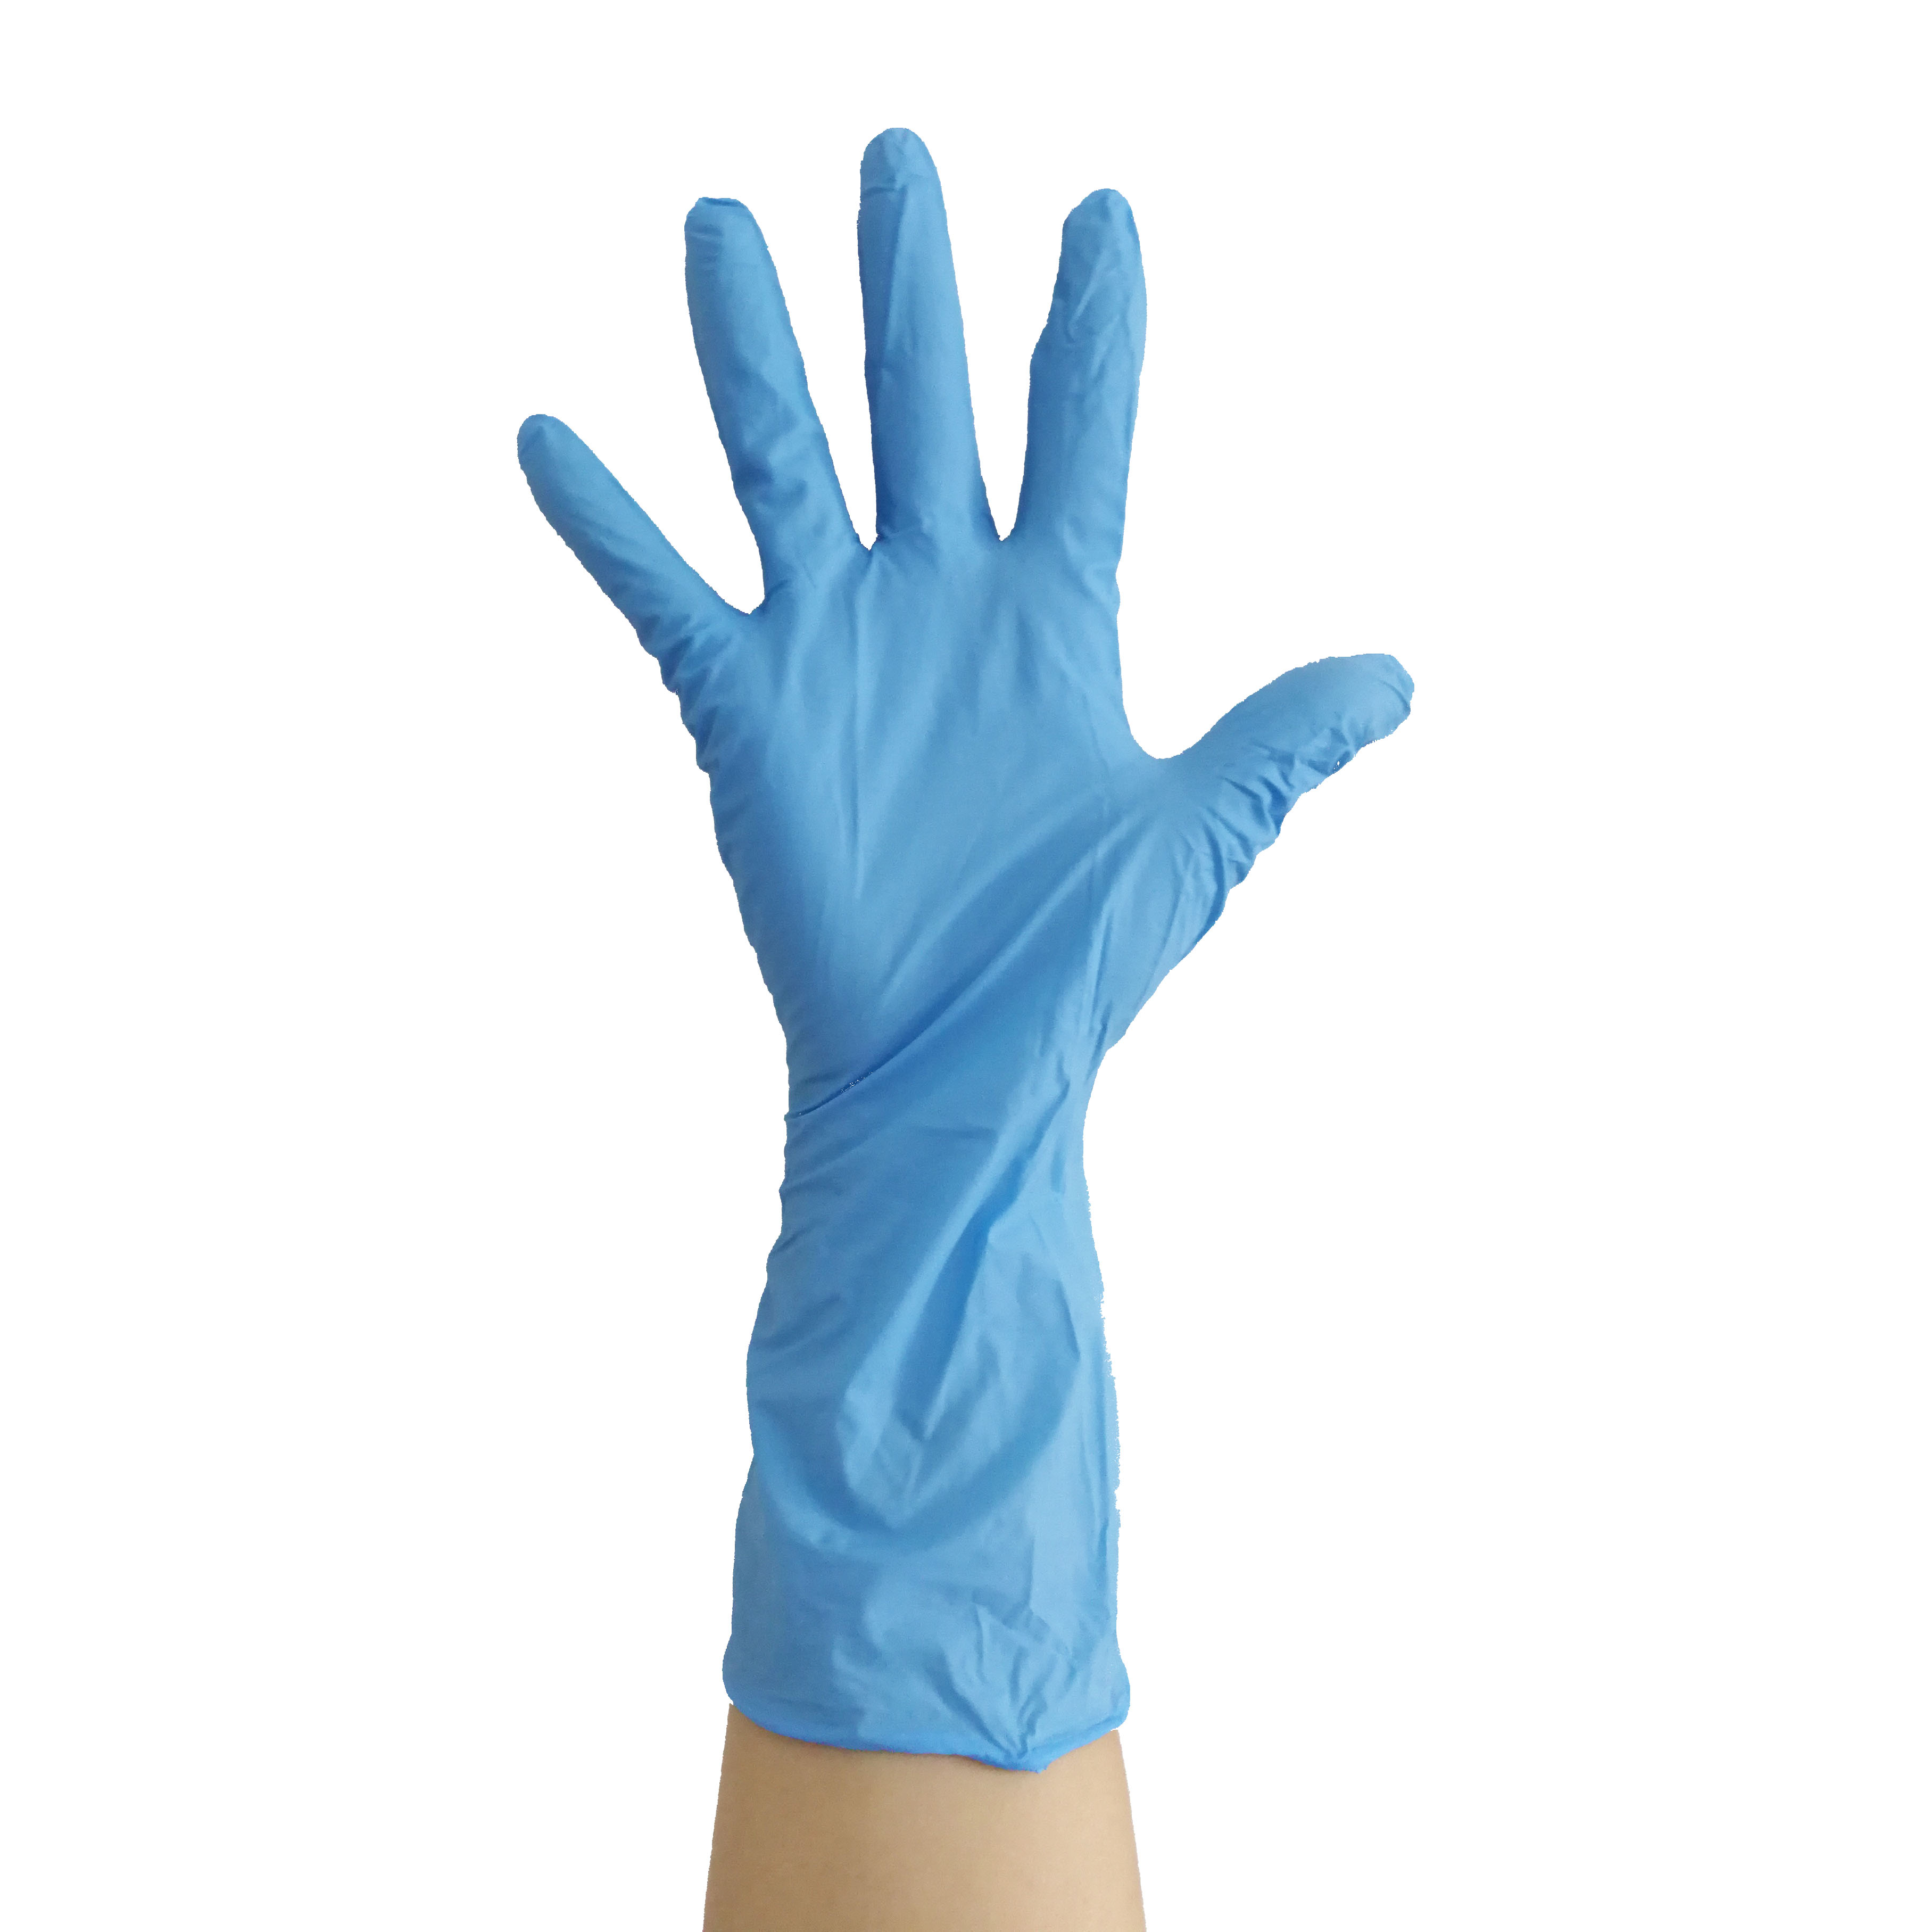 12 "Nitrile Examination Gloves